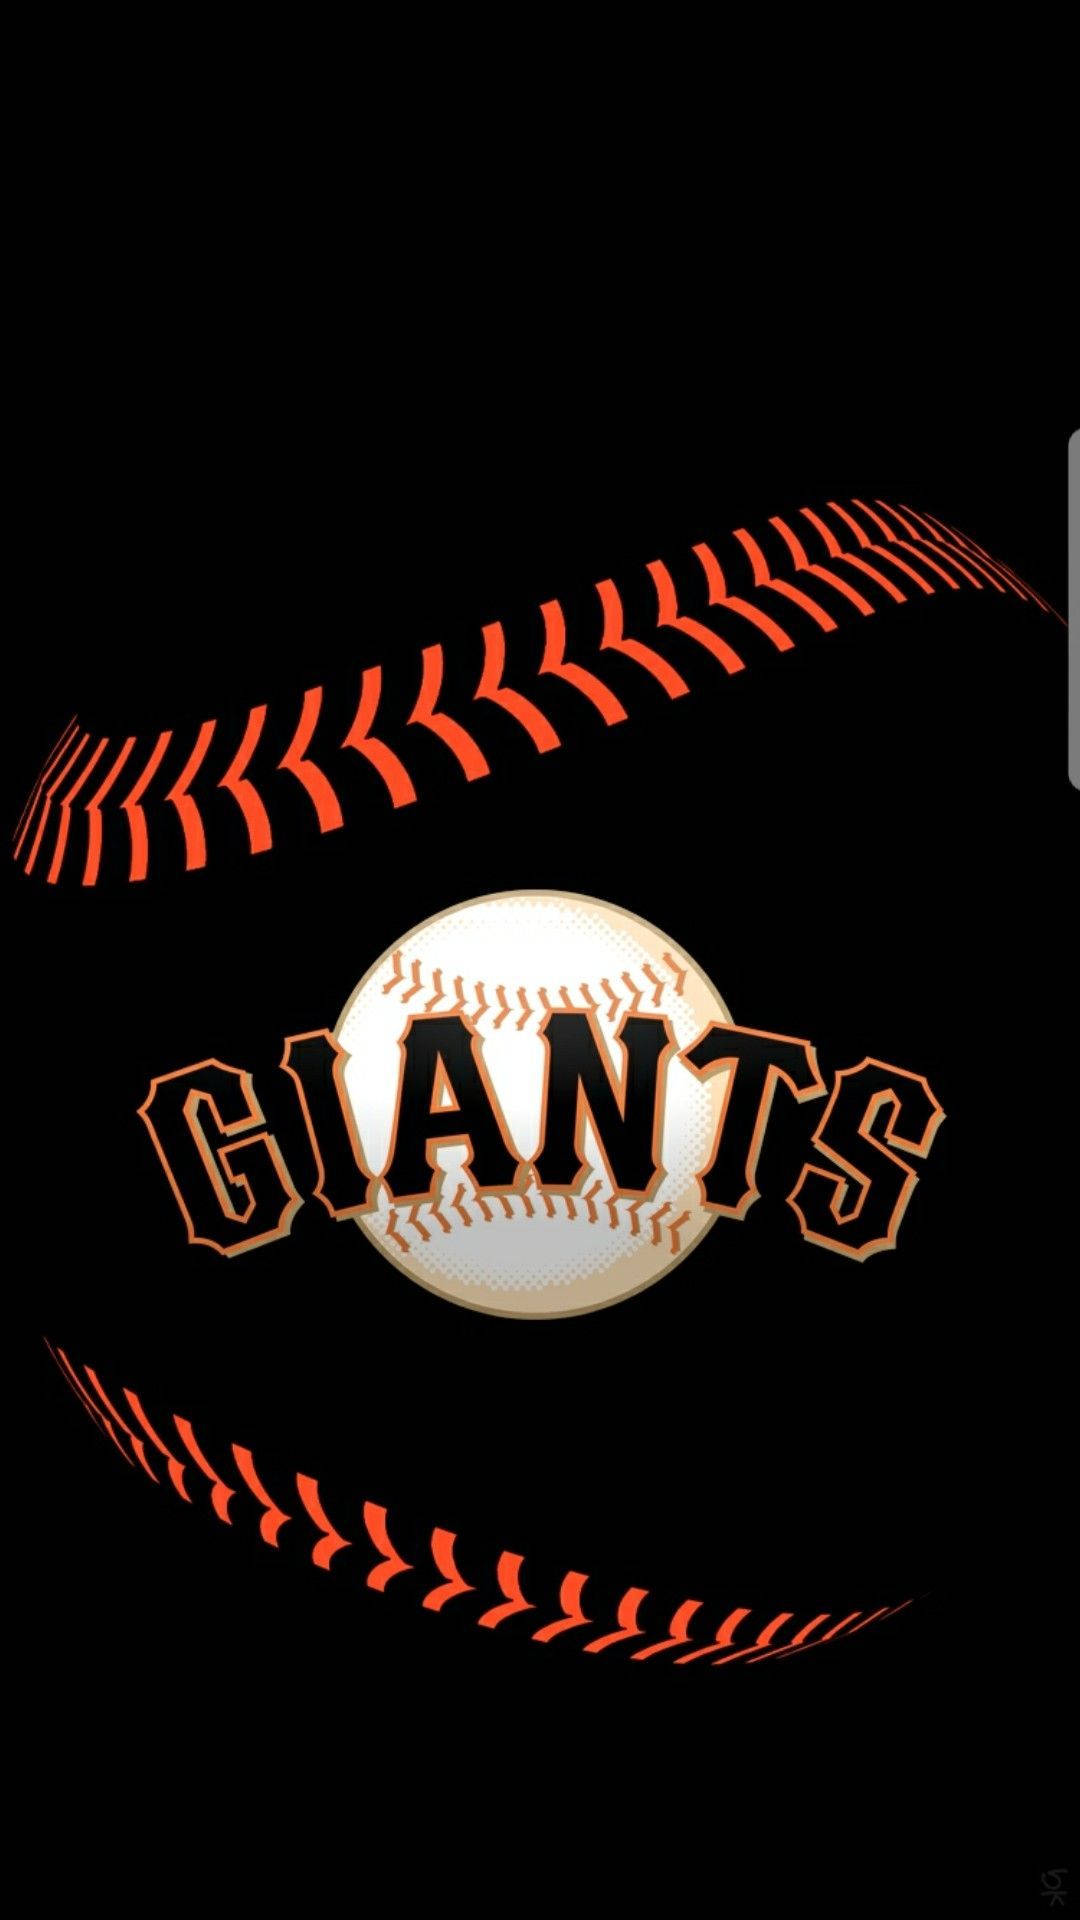 San Francisco Giants In The Baseball Background